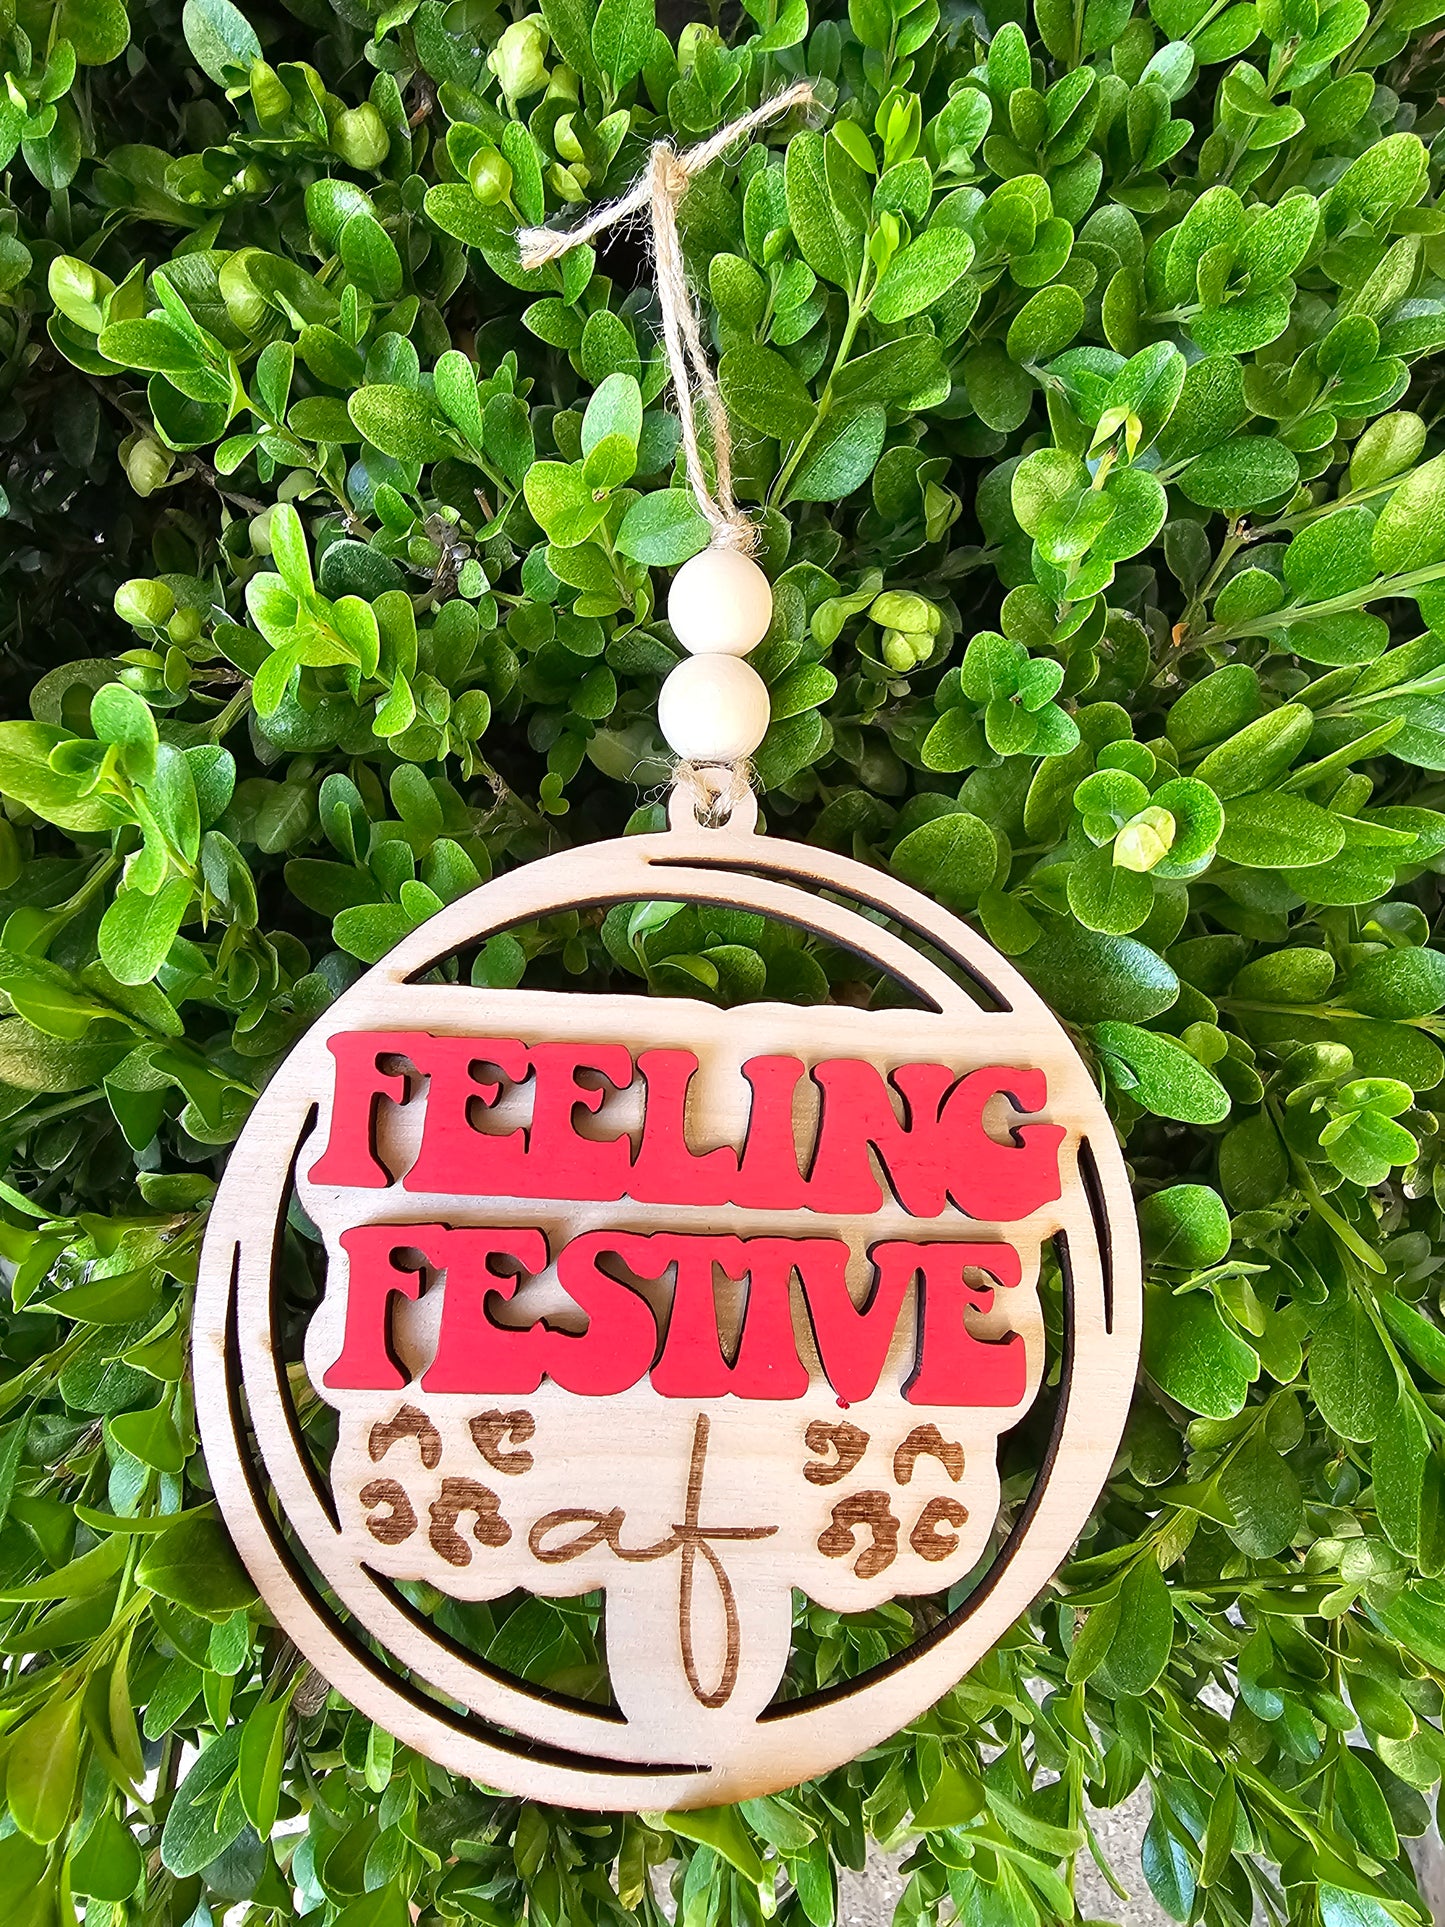 Feeling Festive af Funny Ornament